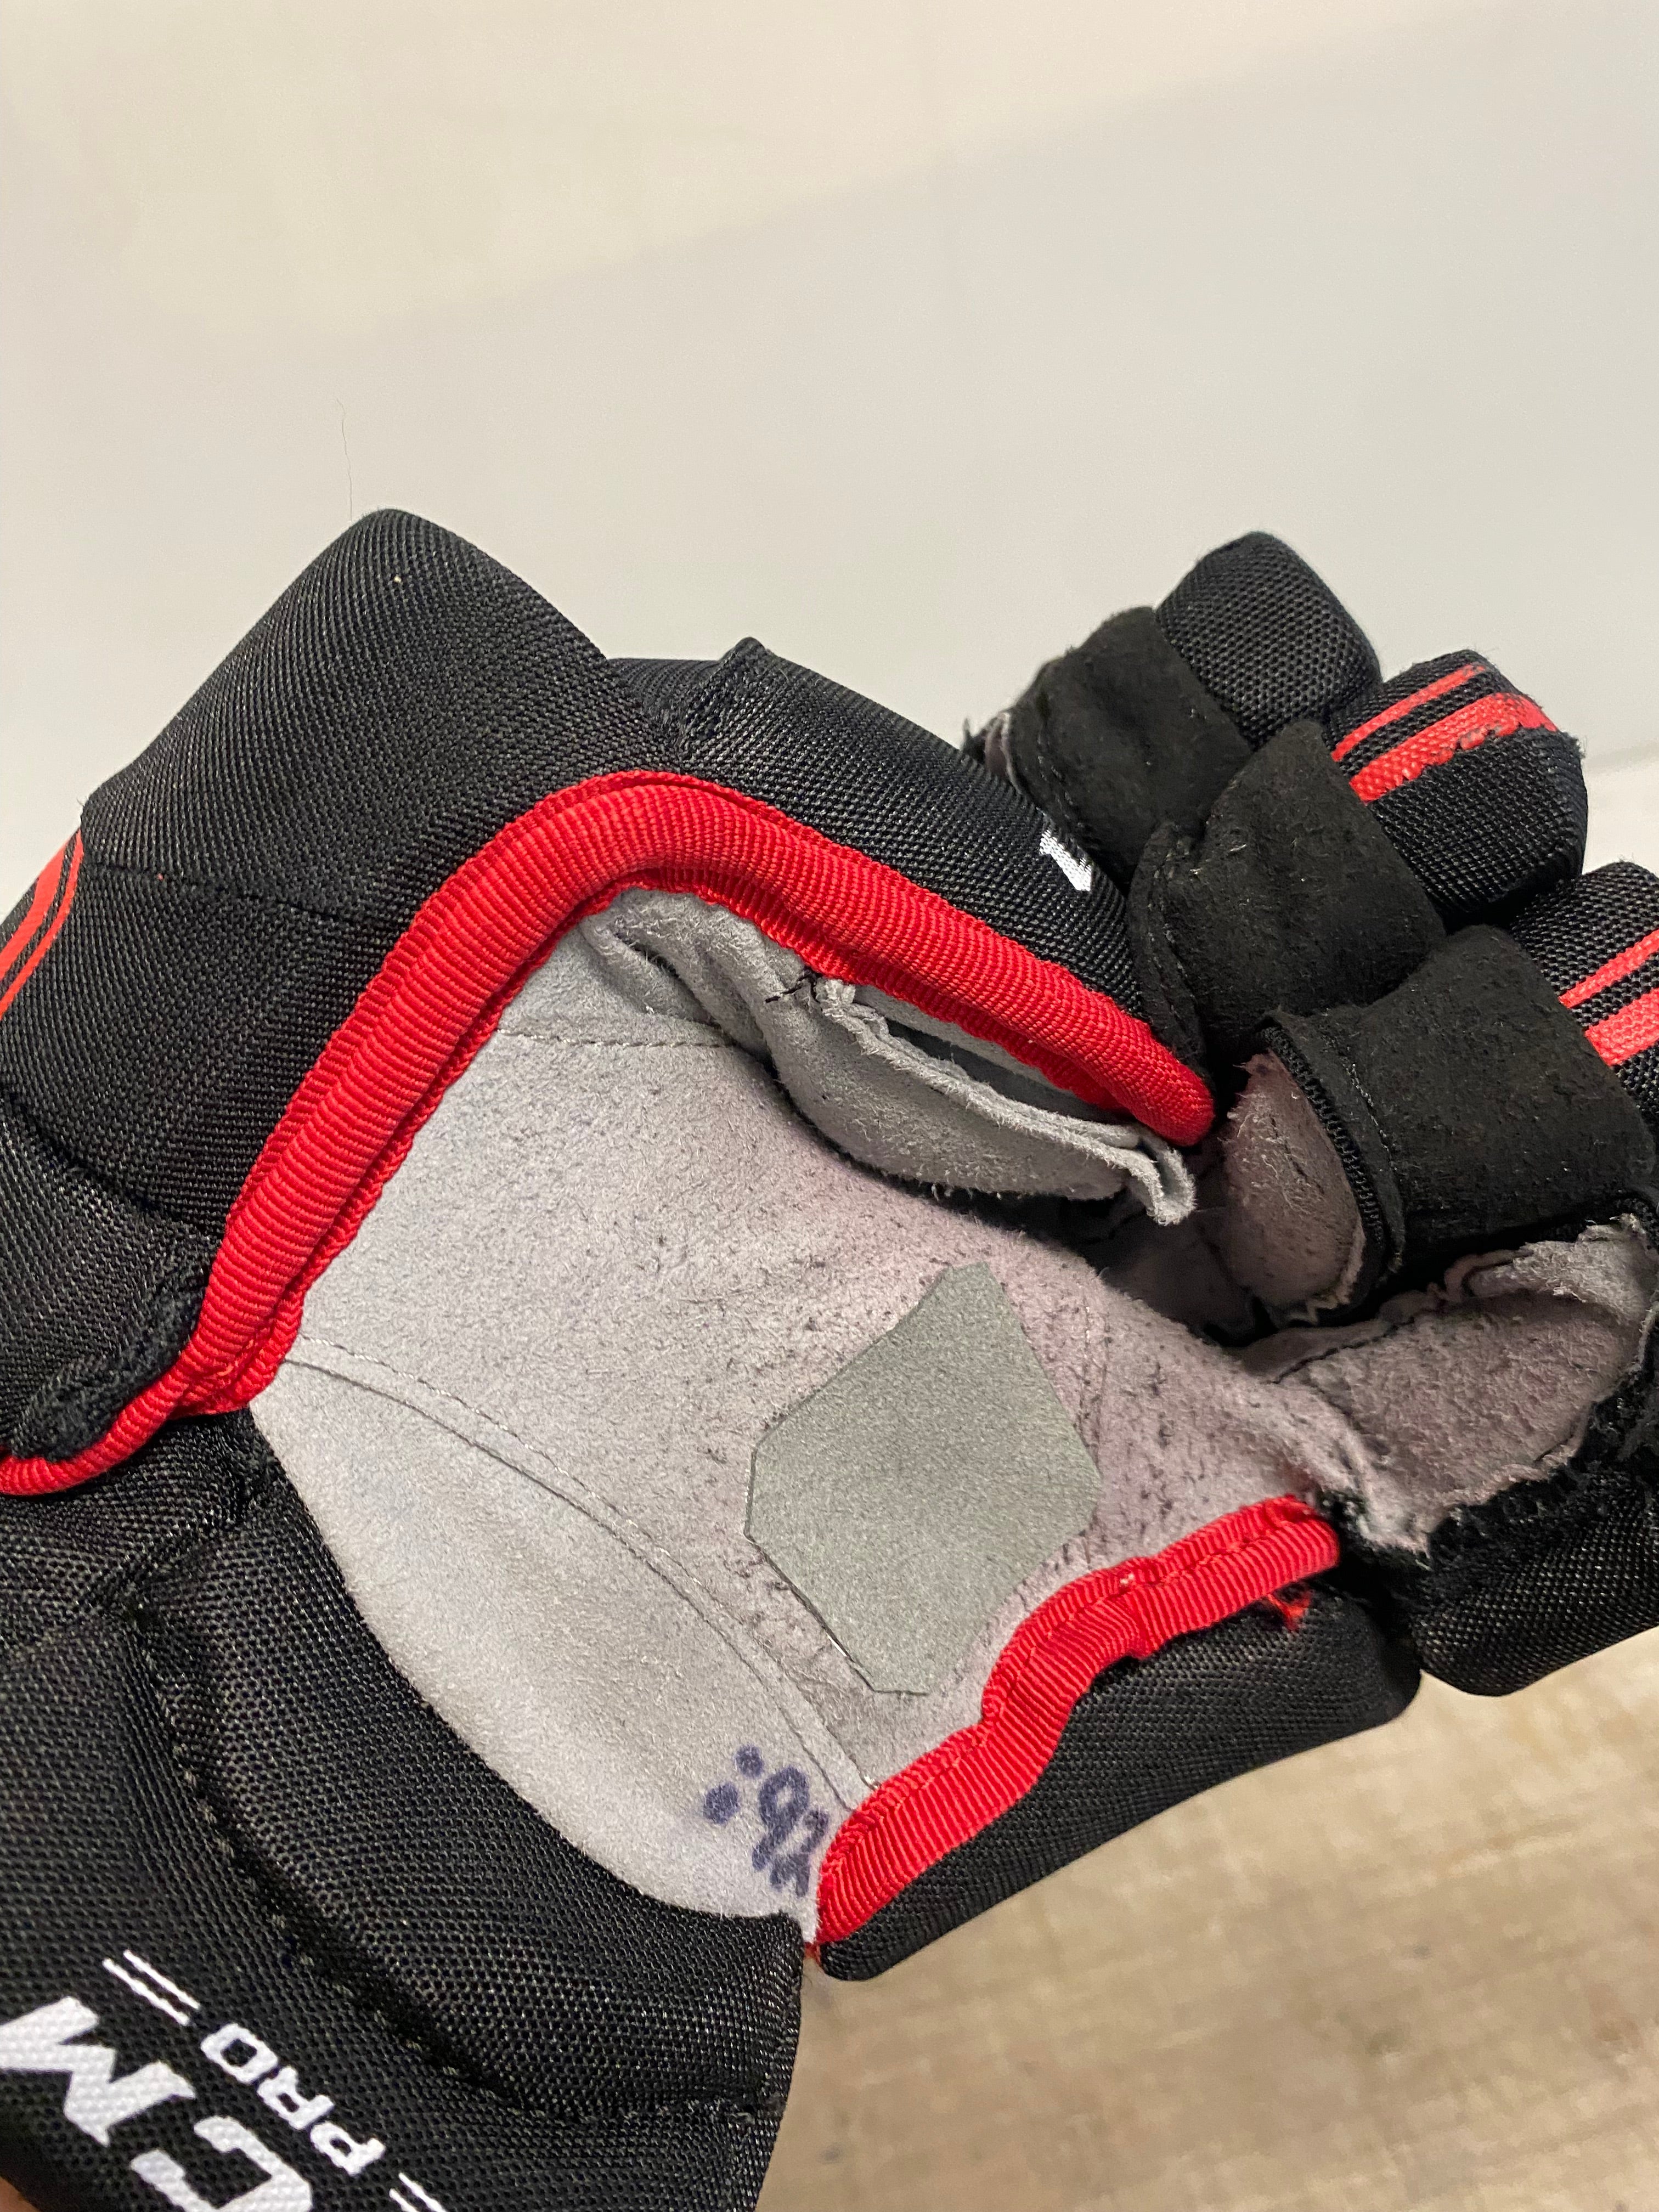 Grease Monkey Pro Fingerless Gloves (Large)